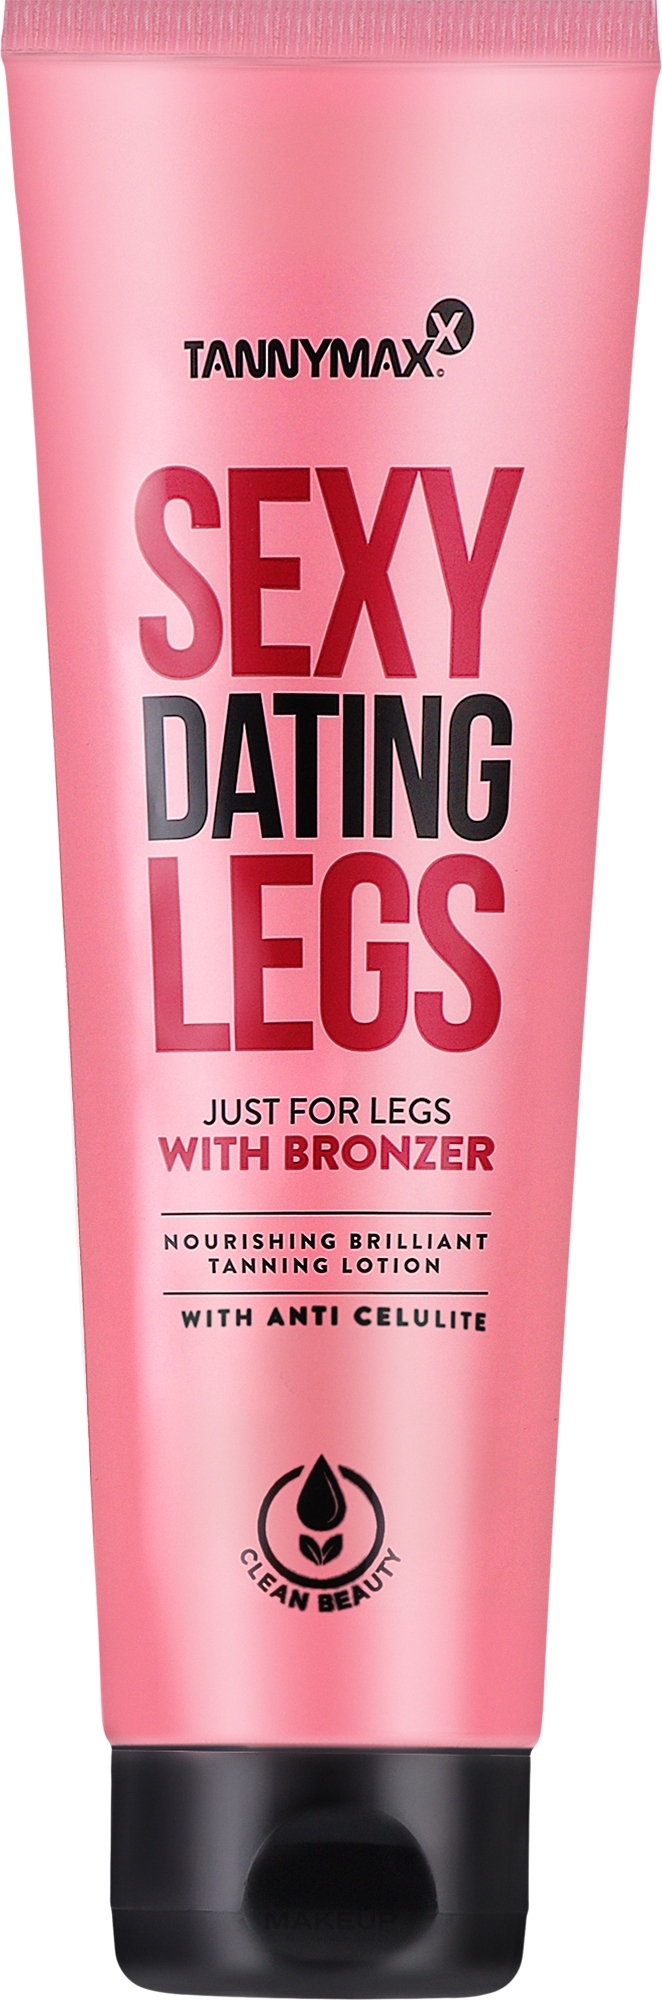 Питательный лосьон для загара ног, с антицеллюлитным эффектом - Tannymaxx Sexy Dating Legs With Bronzer Anti-Celulite Very Dark Tanning + Bronzer — фото 150ml